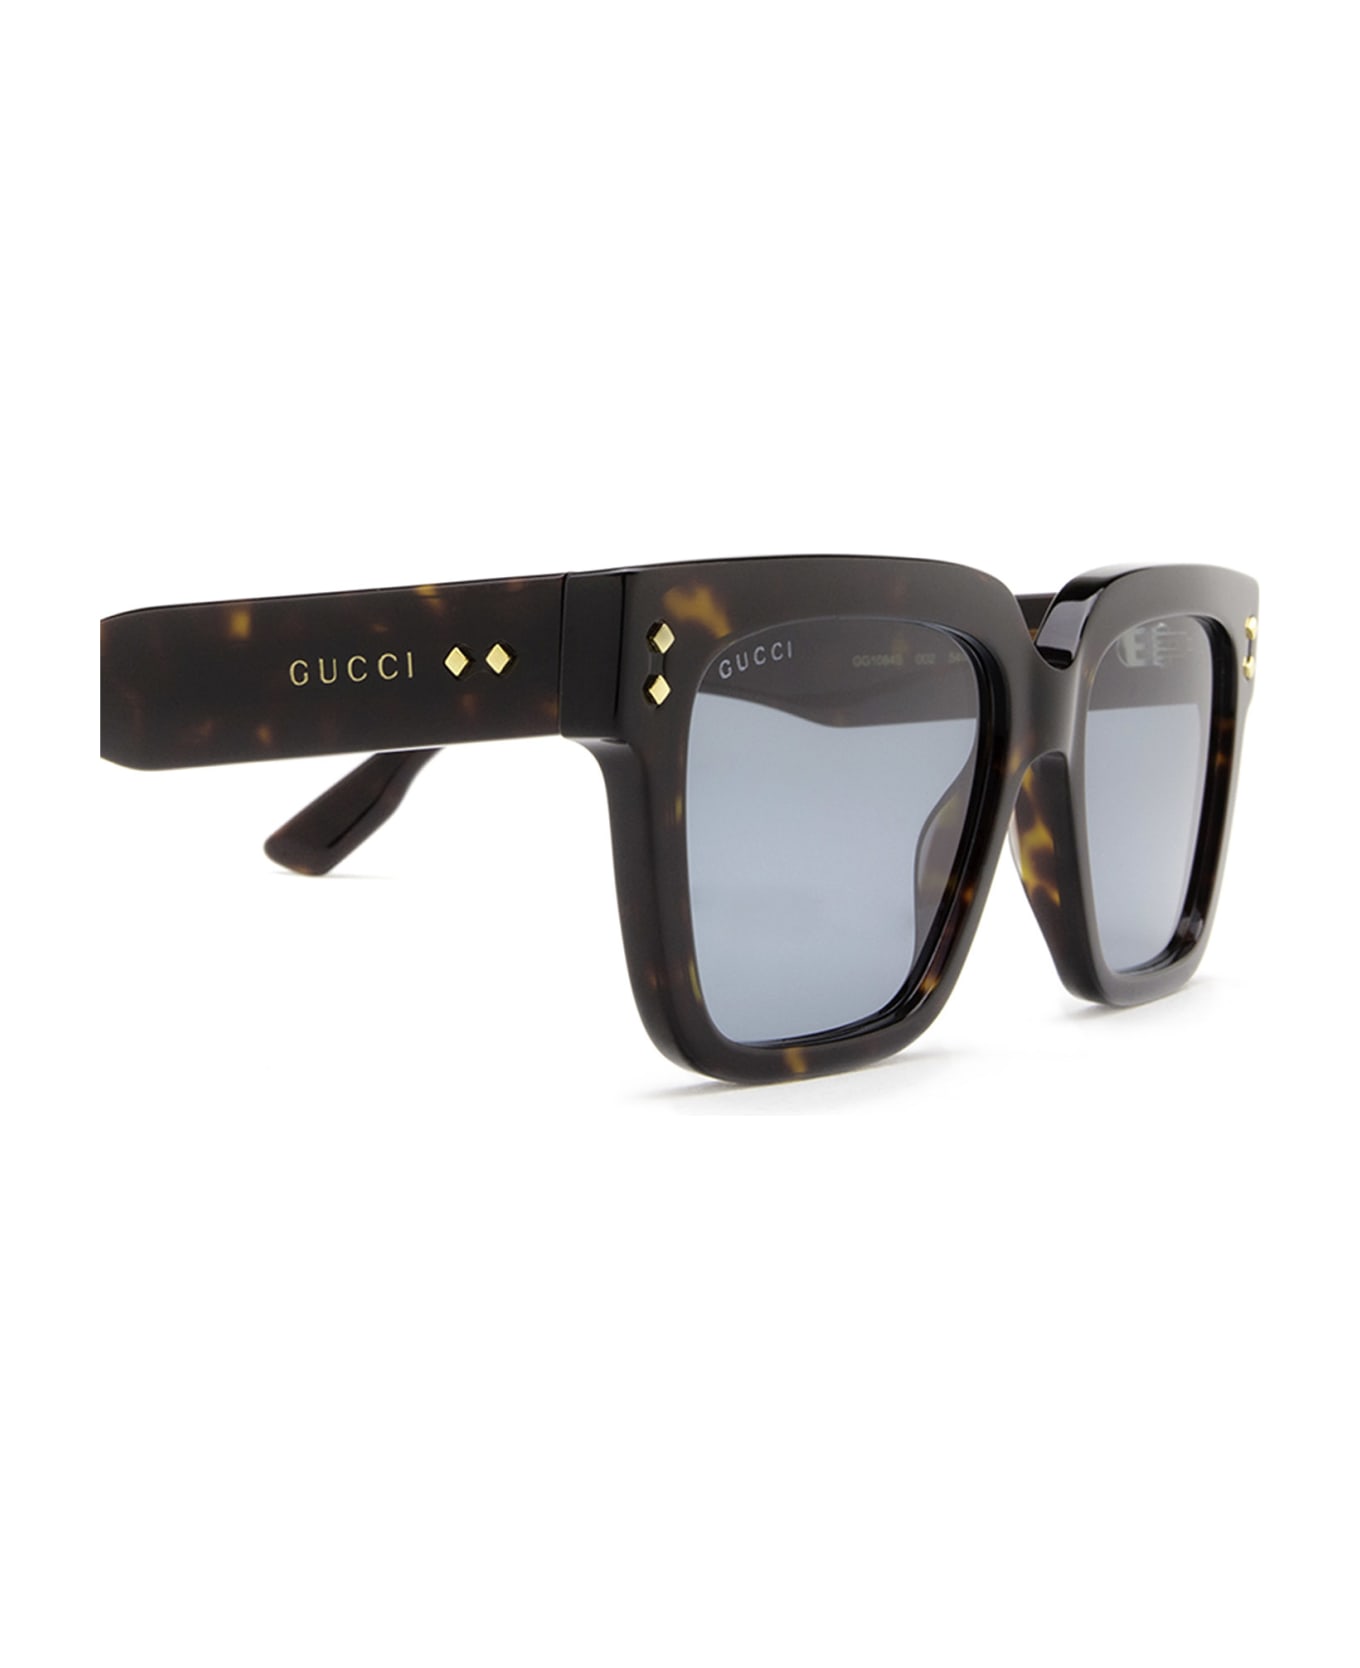 Gucci Eyewear Gg1084s Havana Sunglasses - Havana サングラス